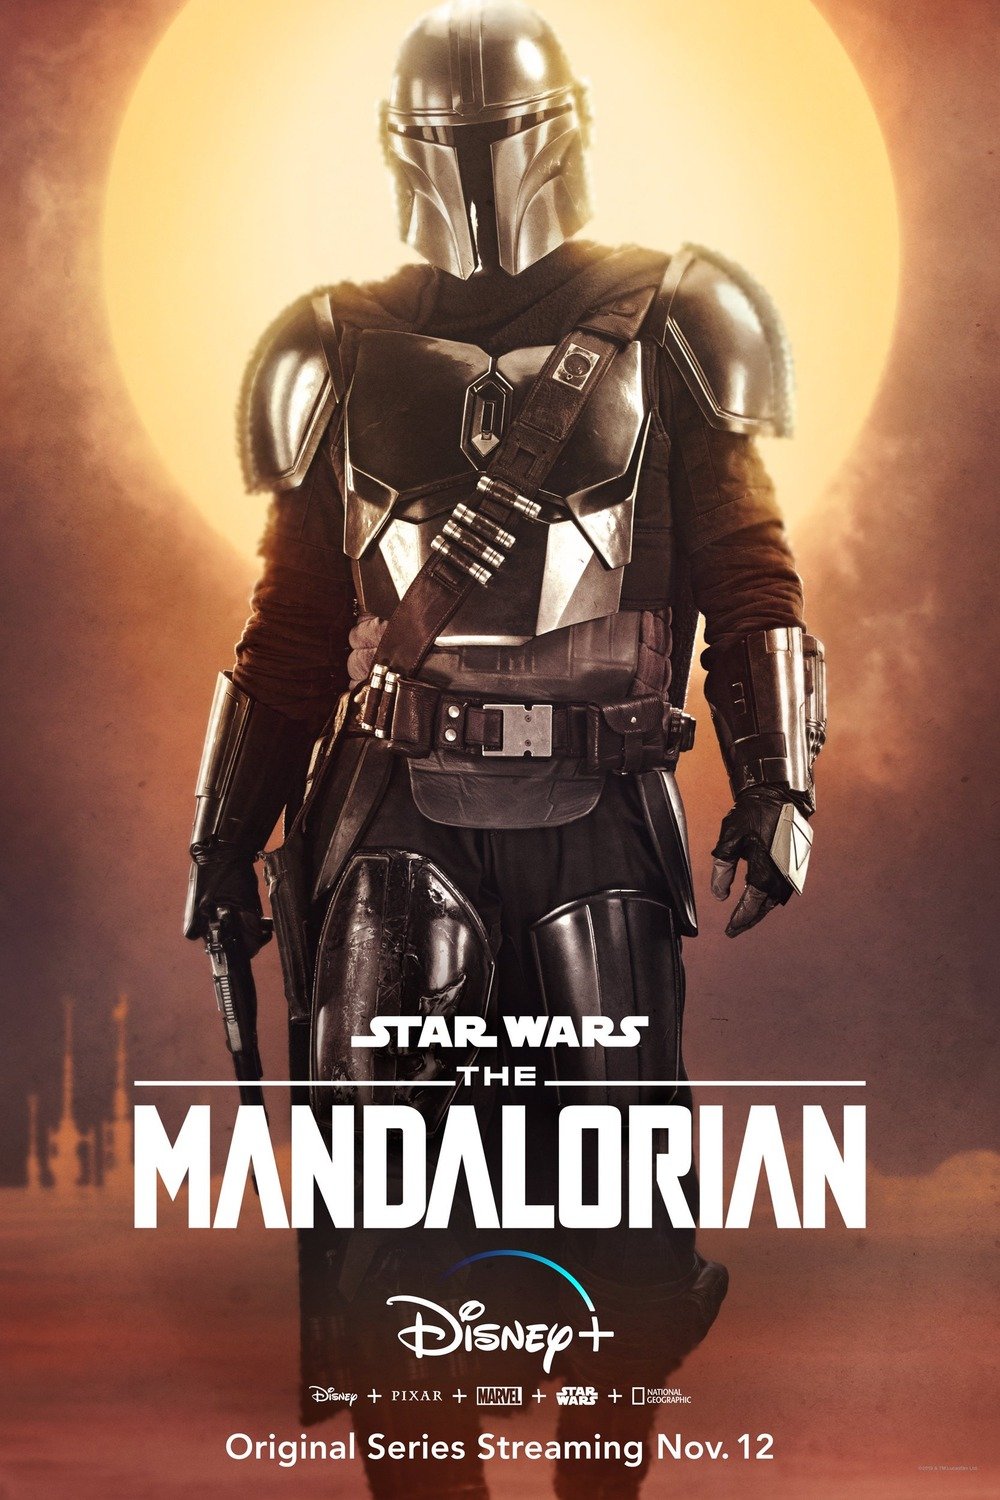 Saison 1 The Mandalorian streaming: où regarder les épisodes?